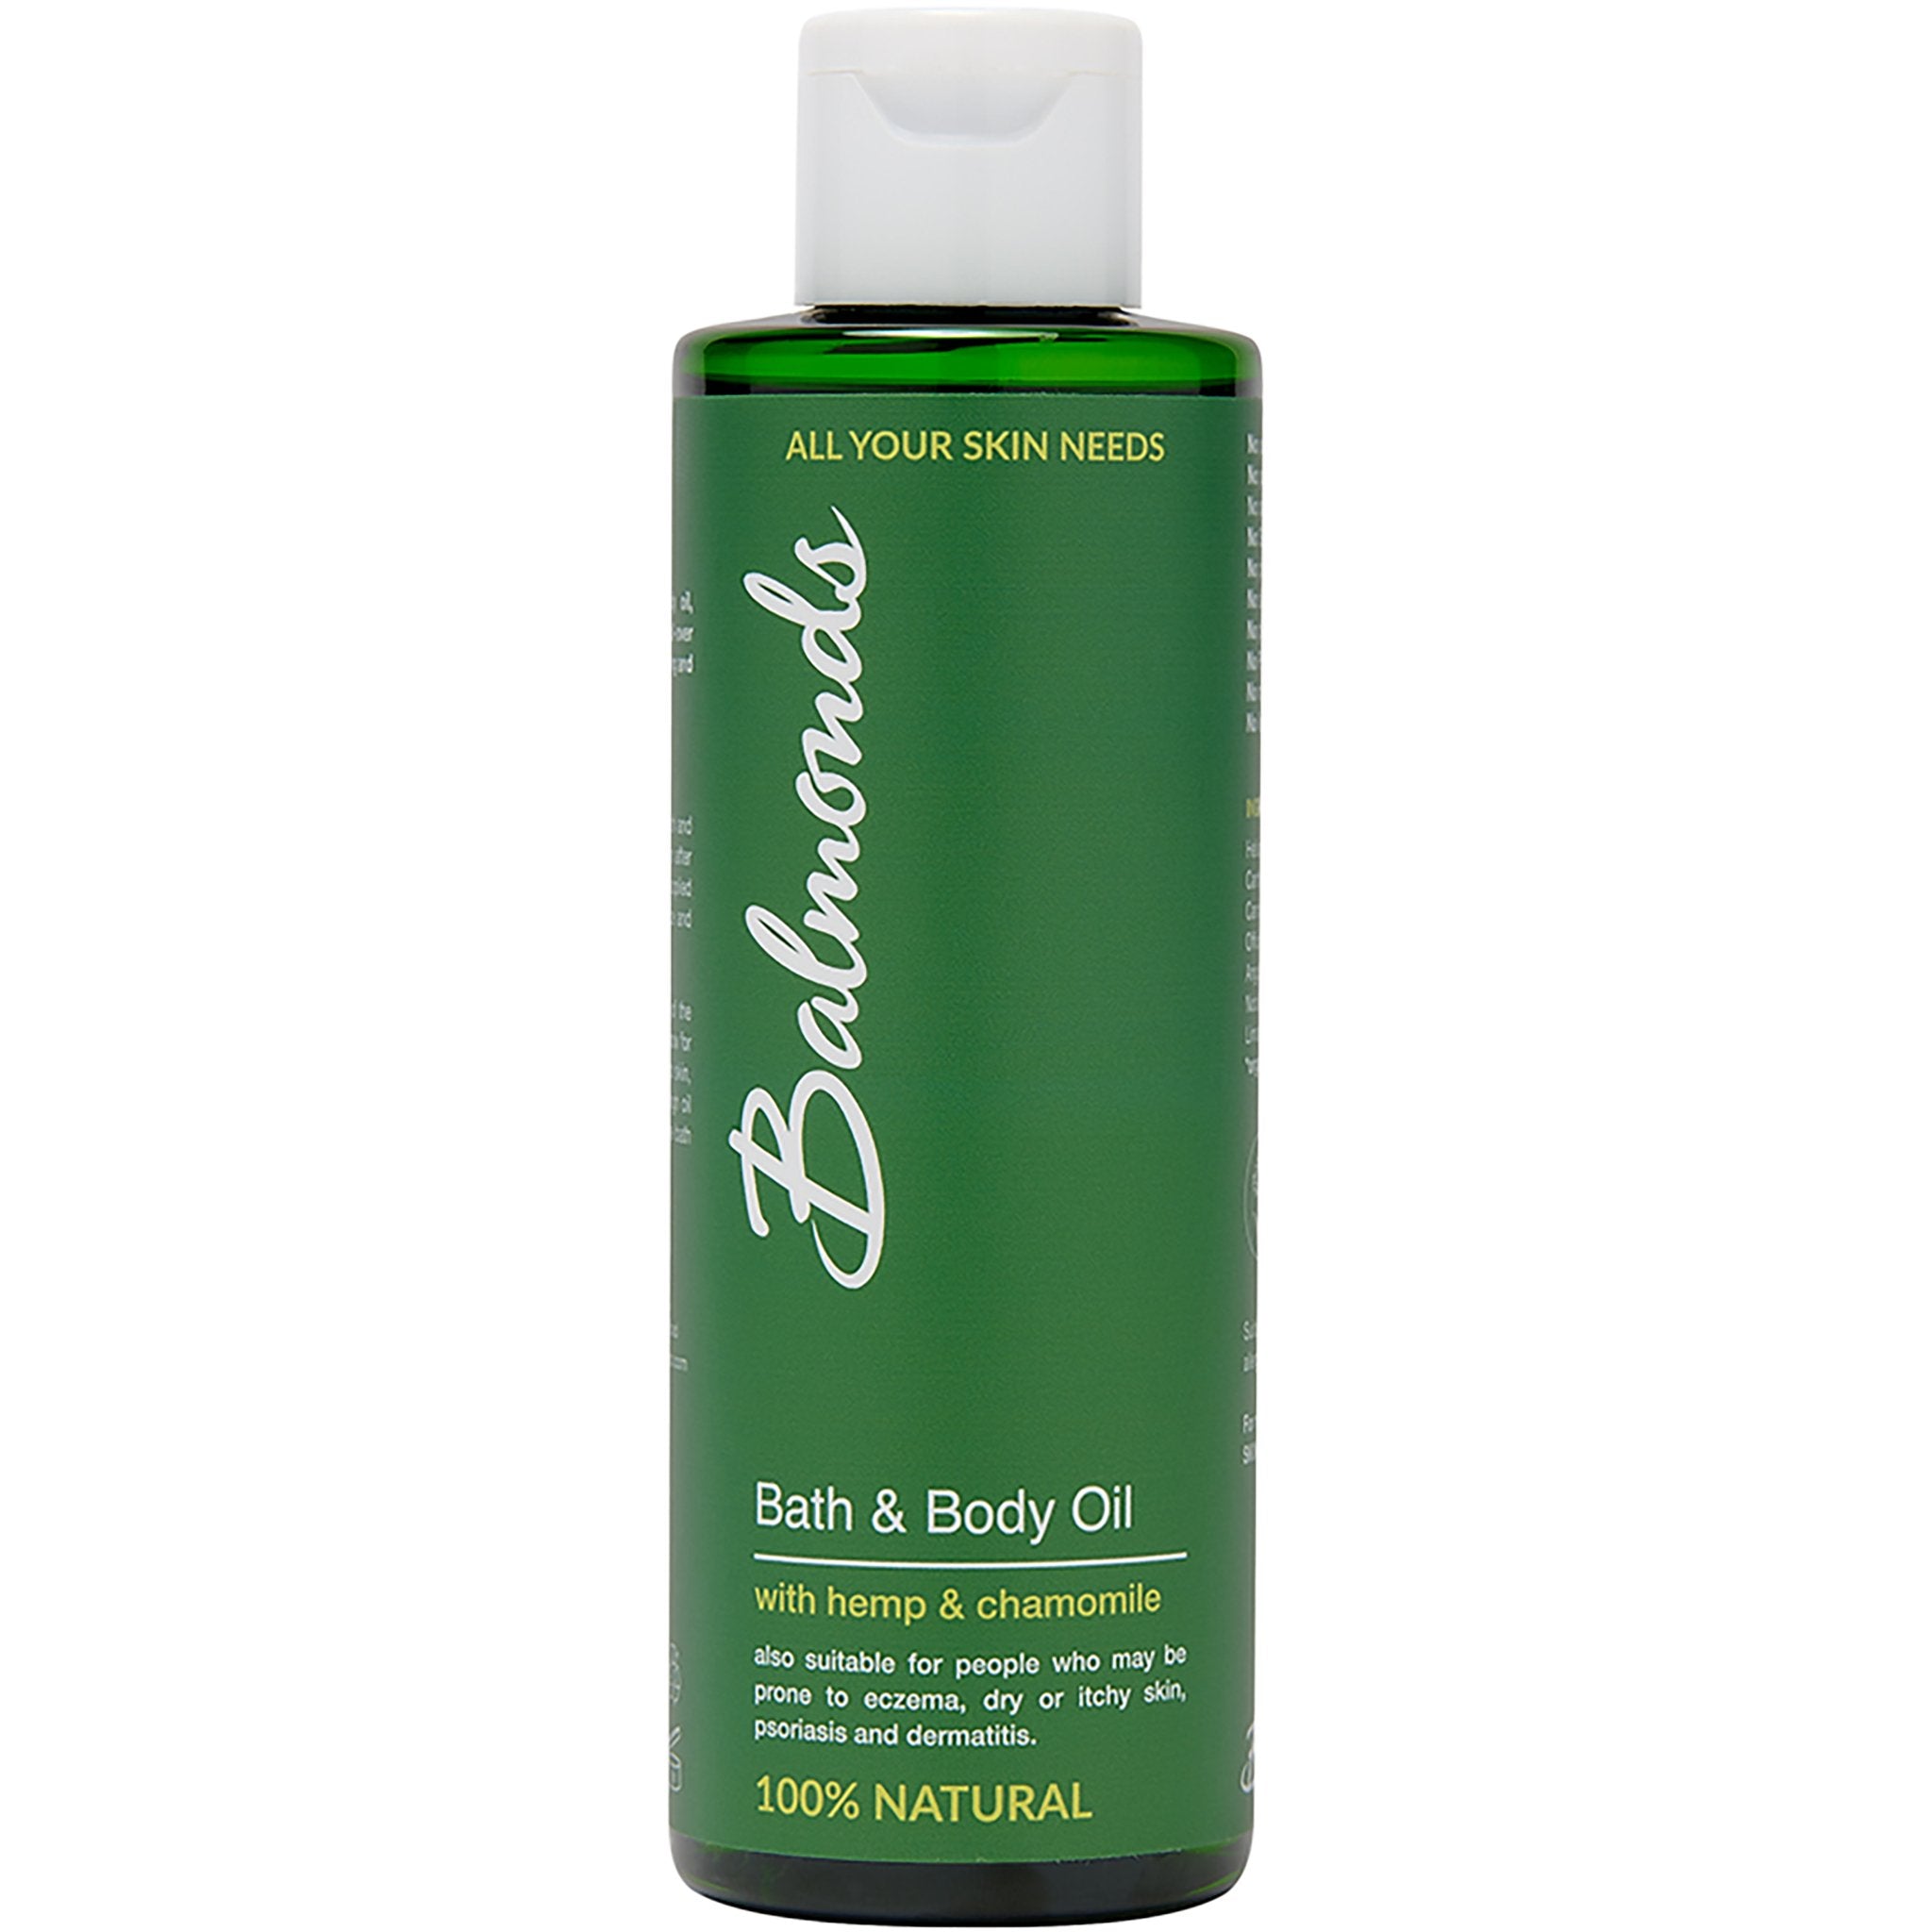 Bath & Body Oil - mypure.co.uk